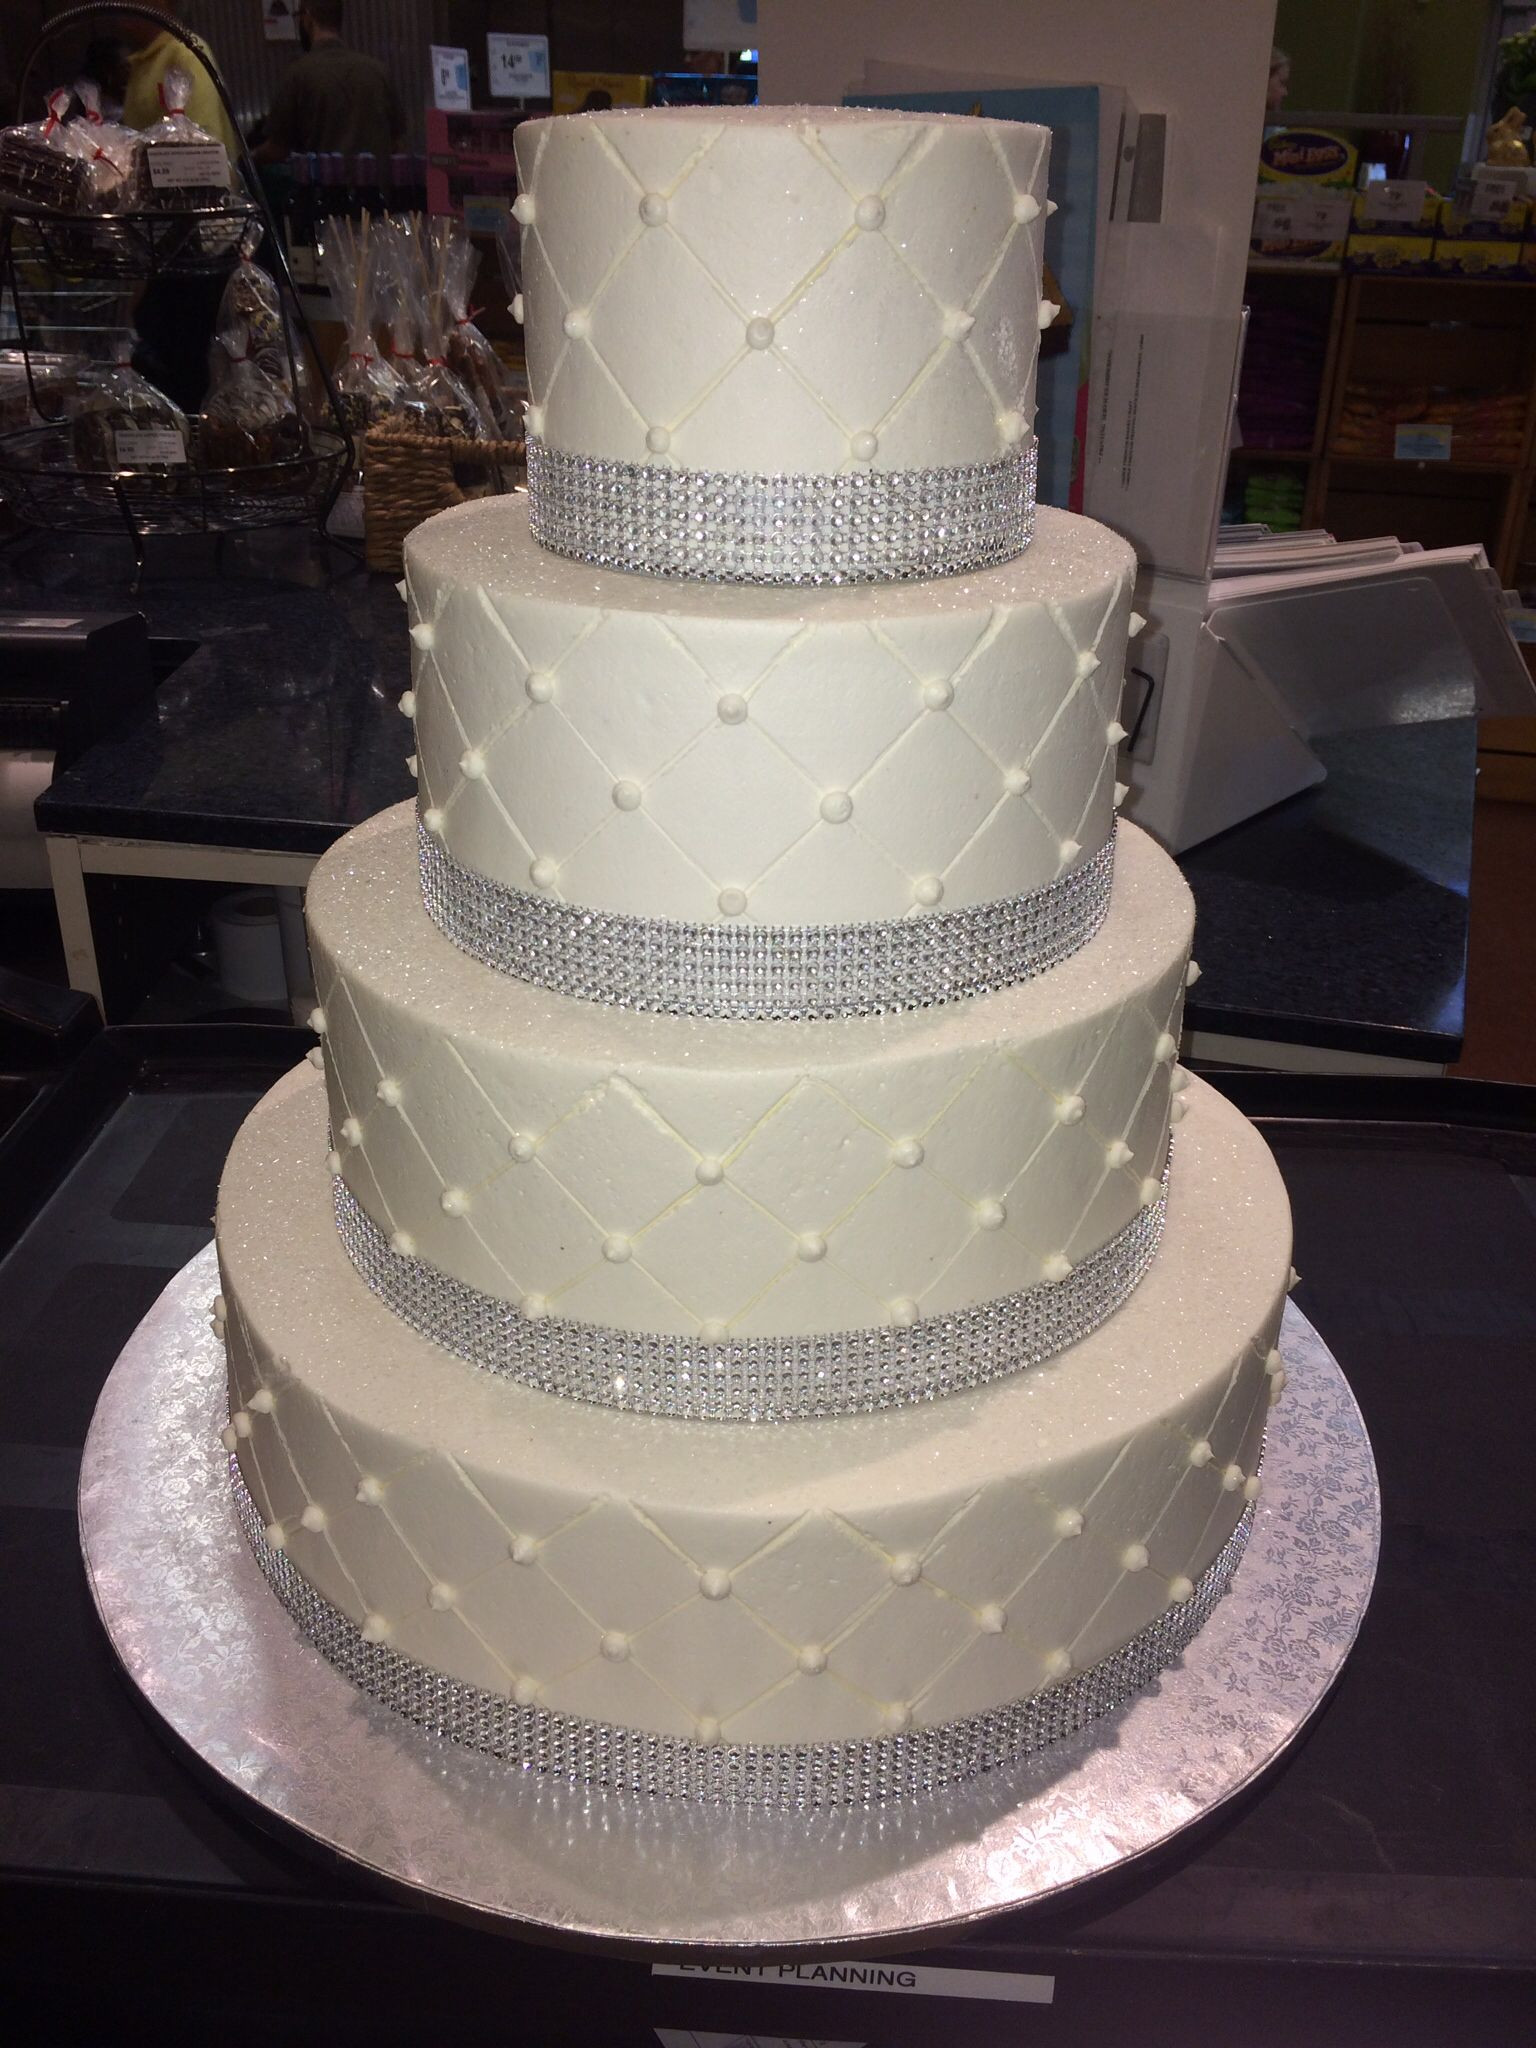 Publix Bakery Wedding Cakes
 Publix GreenWise Wedding Cake Hyde Park Tampa FL